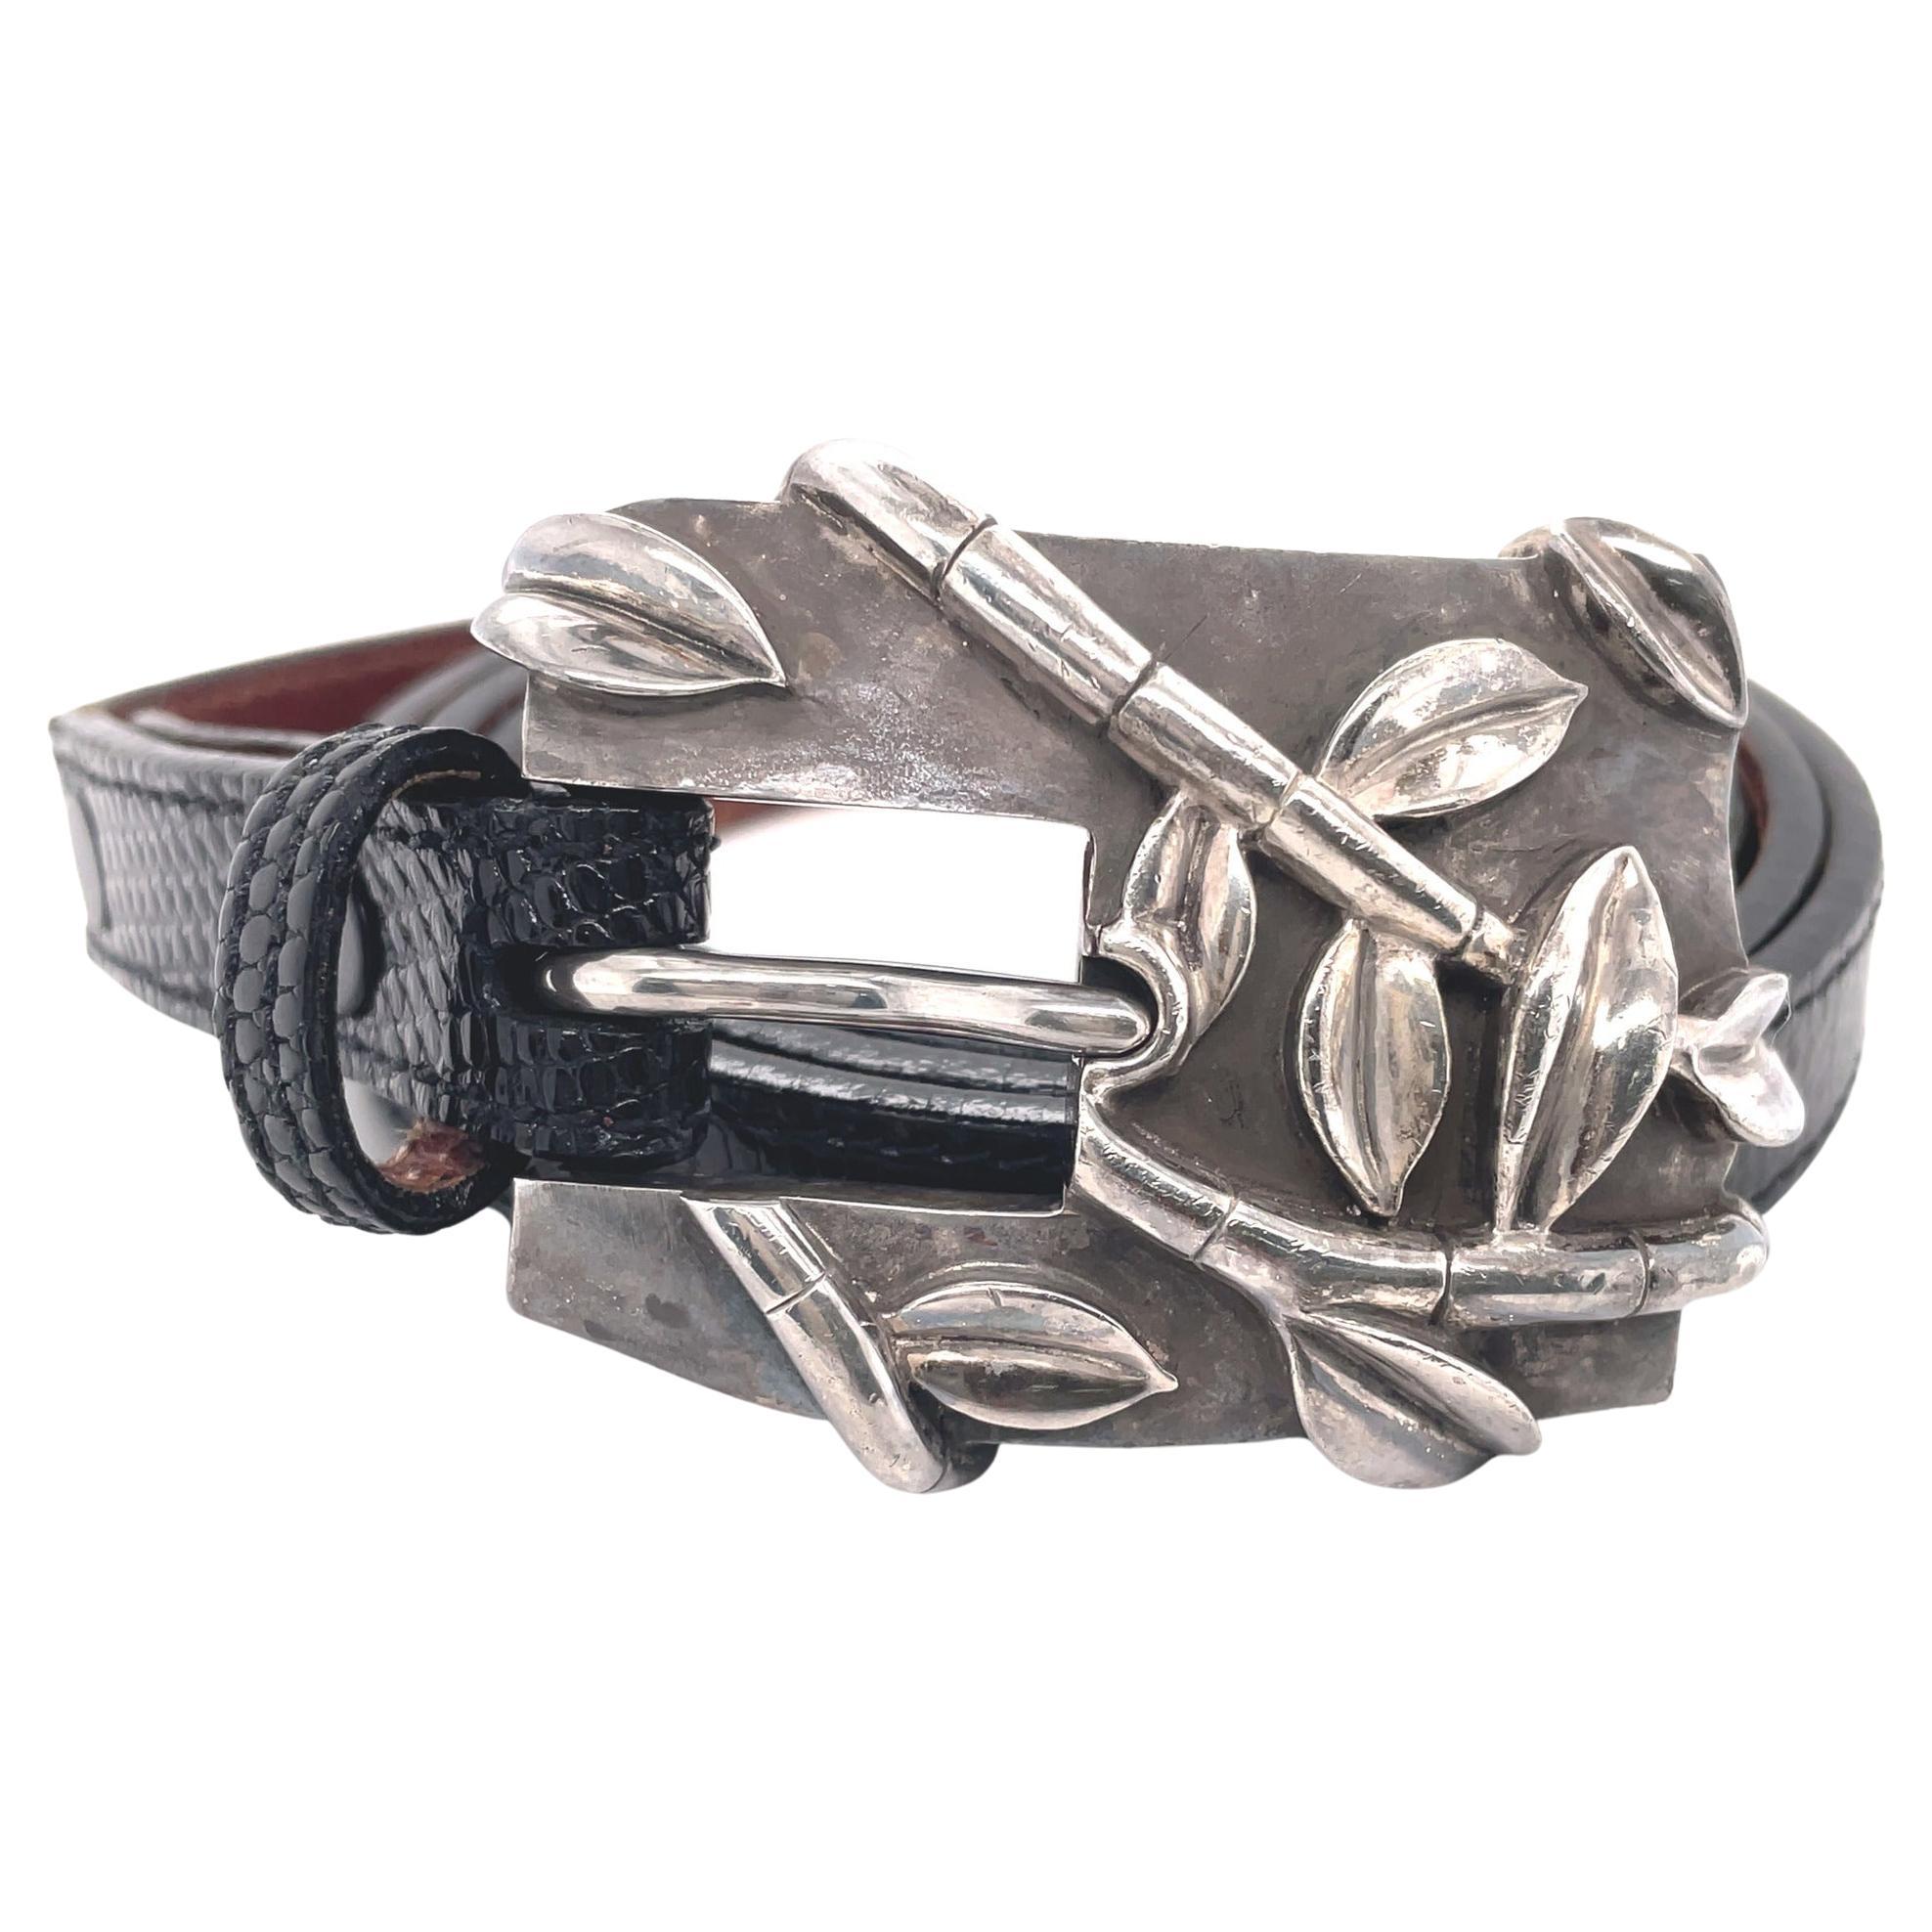 Hot Product belt Silver Single discount 63% WOMEN FASHION Accessories Belt Silver 